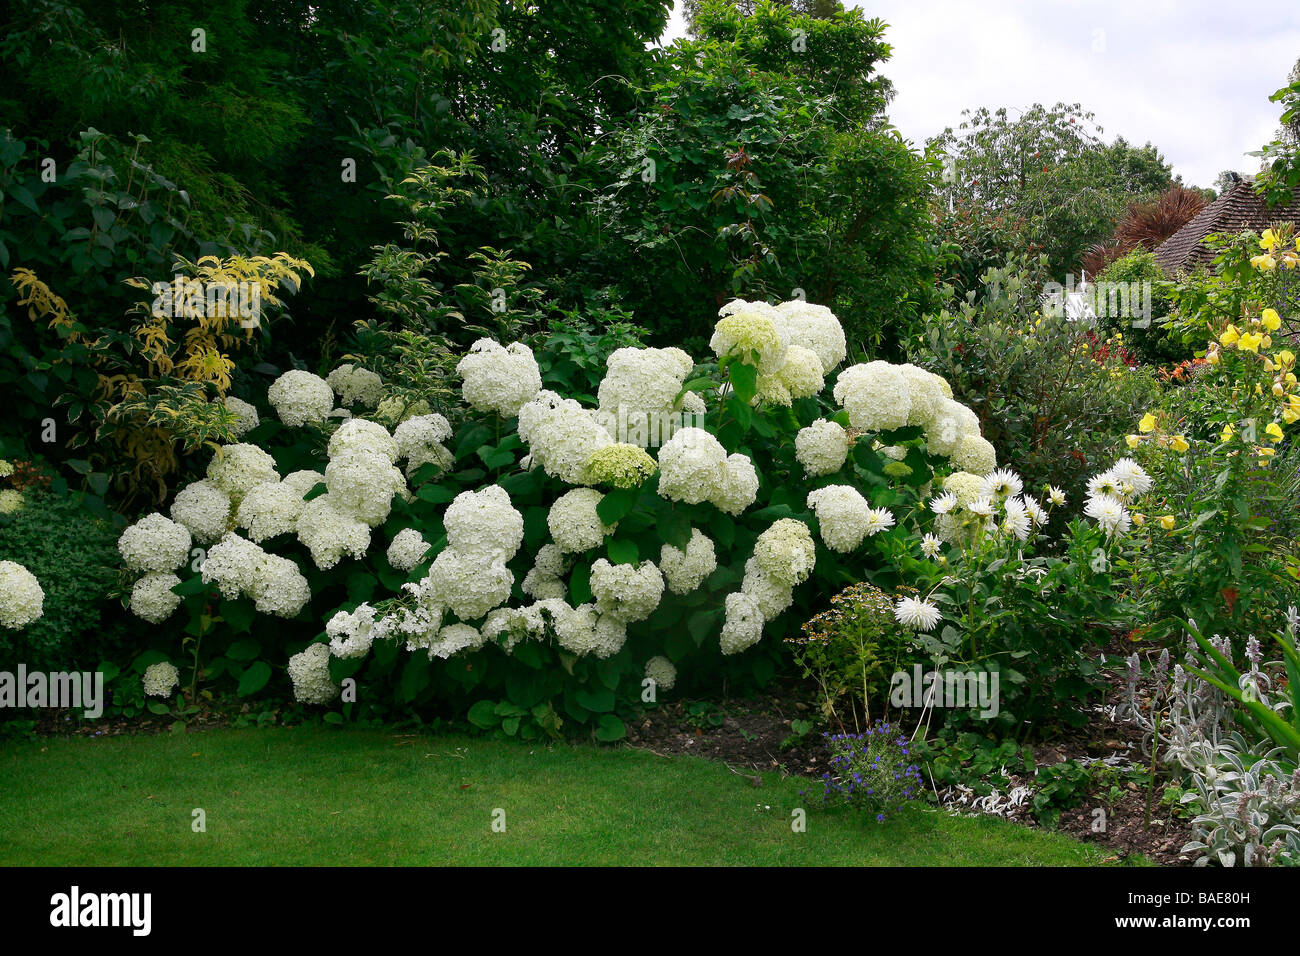 Hydrangea arborescens 'Annabelle' Stock Photo